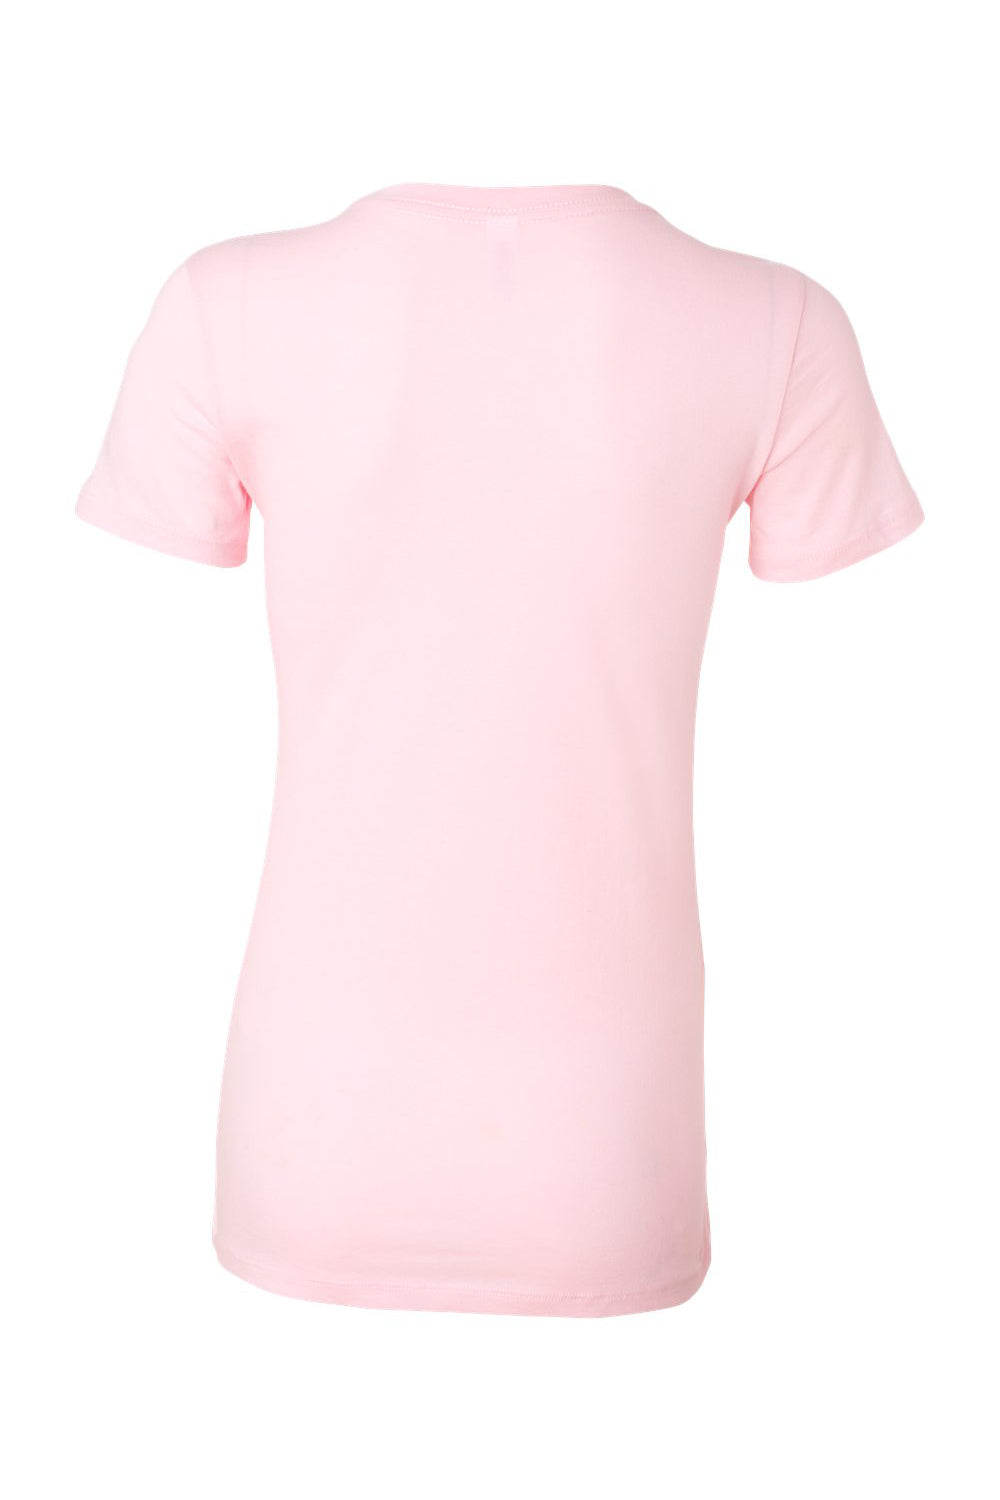 Bella + Canvas BC6004/6004 Womens The Favorite Short Sleeve Crewneck T-Shirt Pink Flat Back